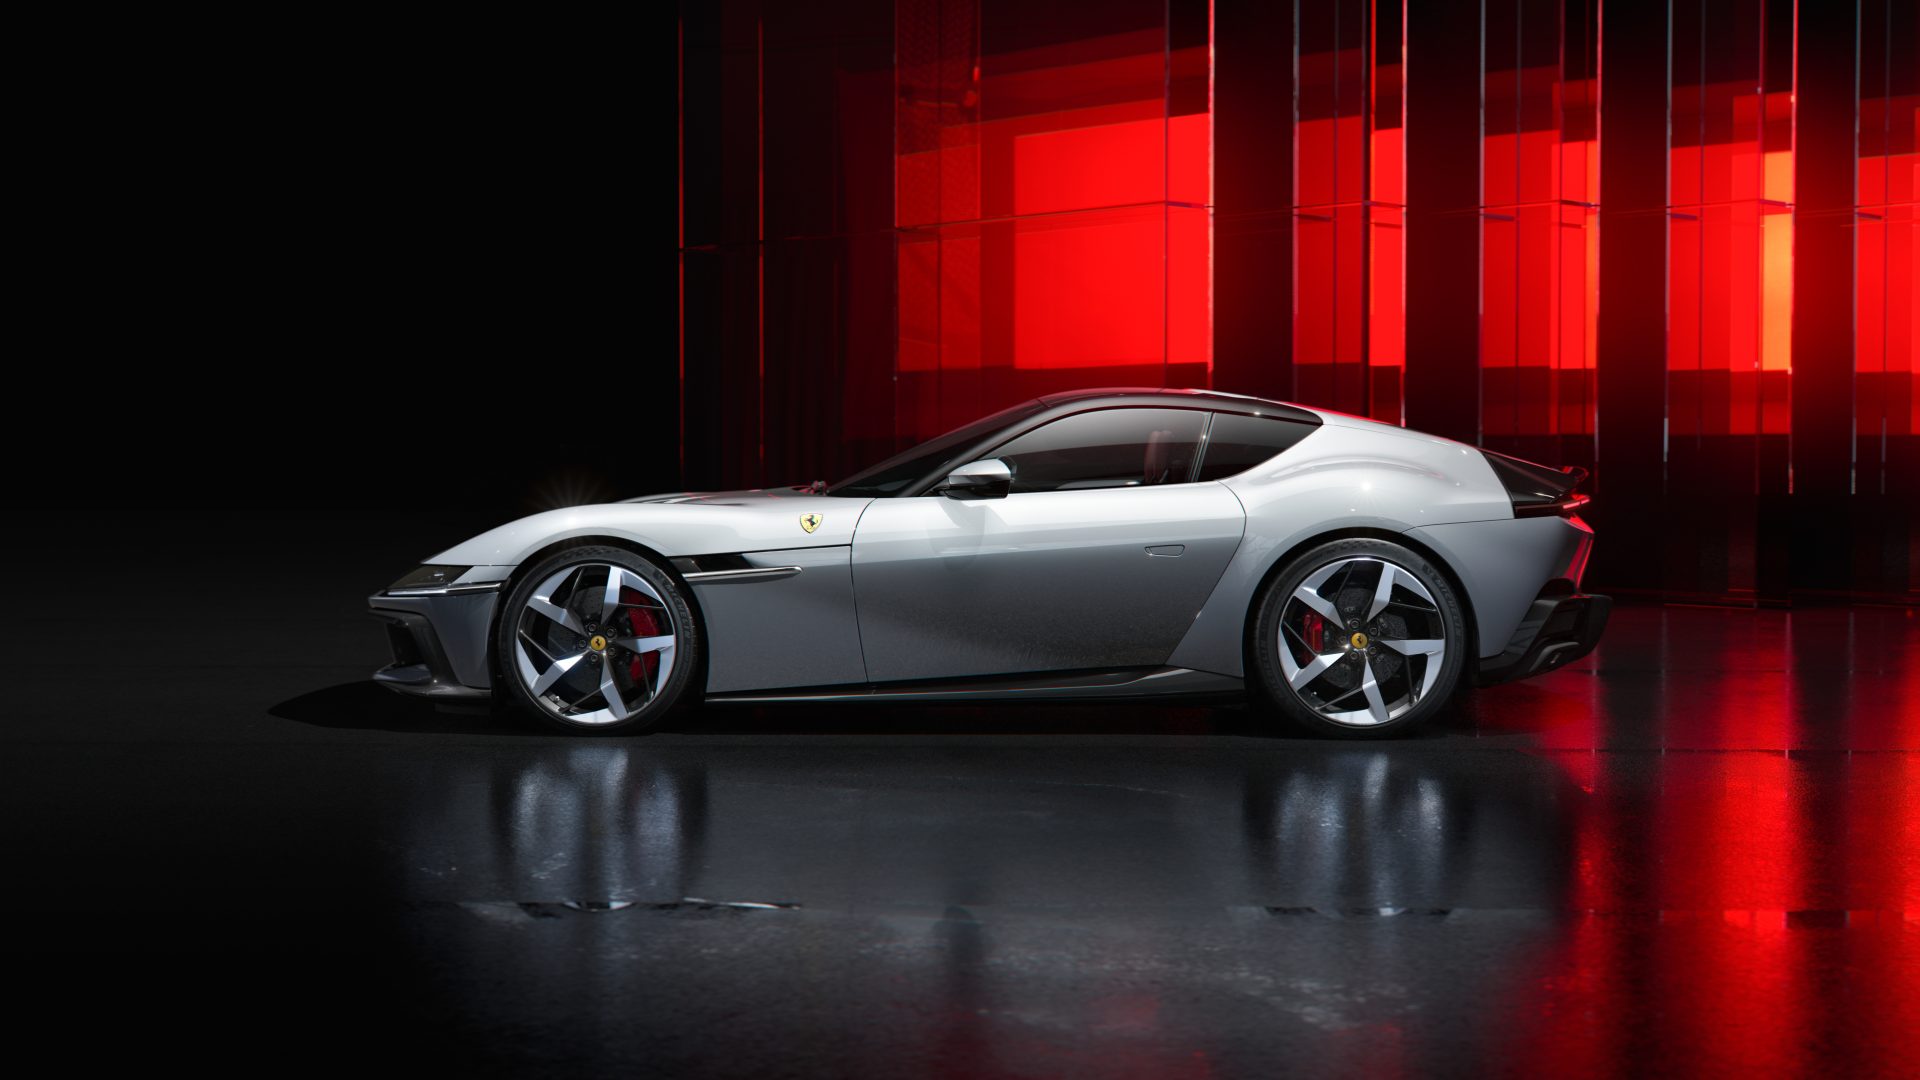 New Ferrari V12 ext 07 Design white media 57a99a0a 7956 4676 84dd c5150f3428f6 Ferrari 12Cilindri : Μια σύγχρονη Daytona